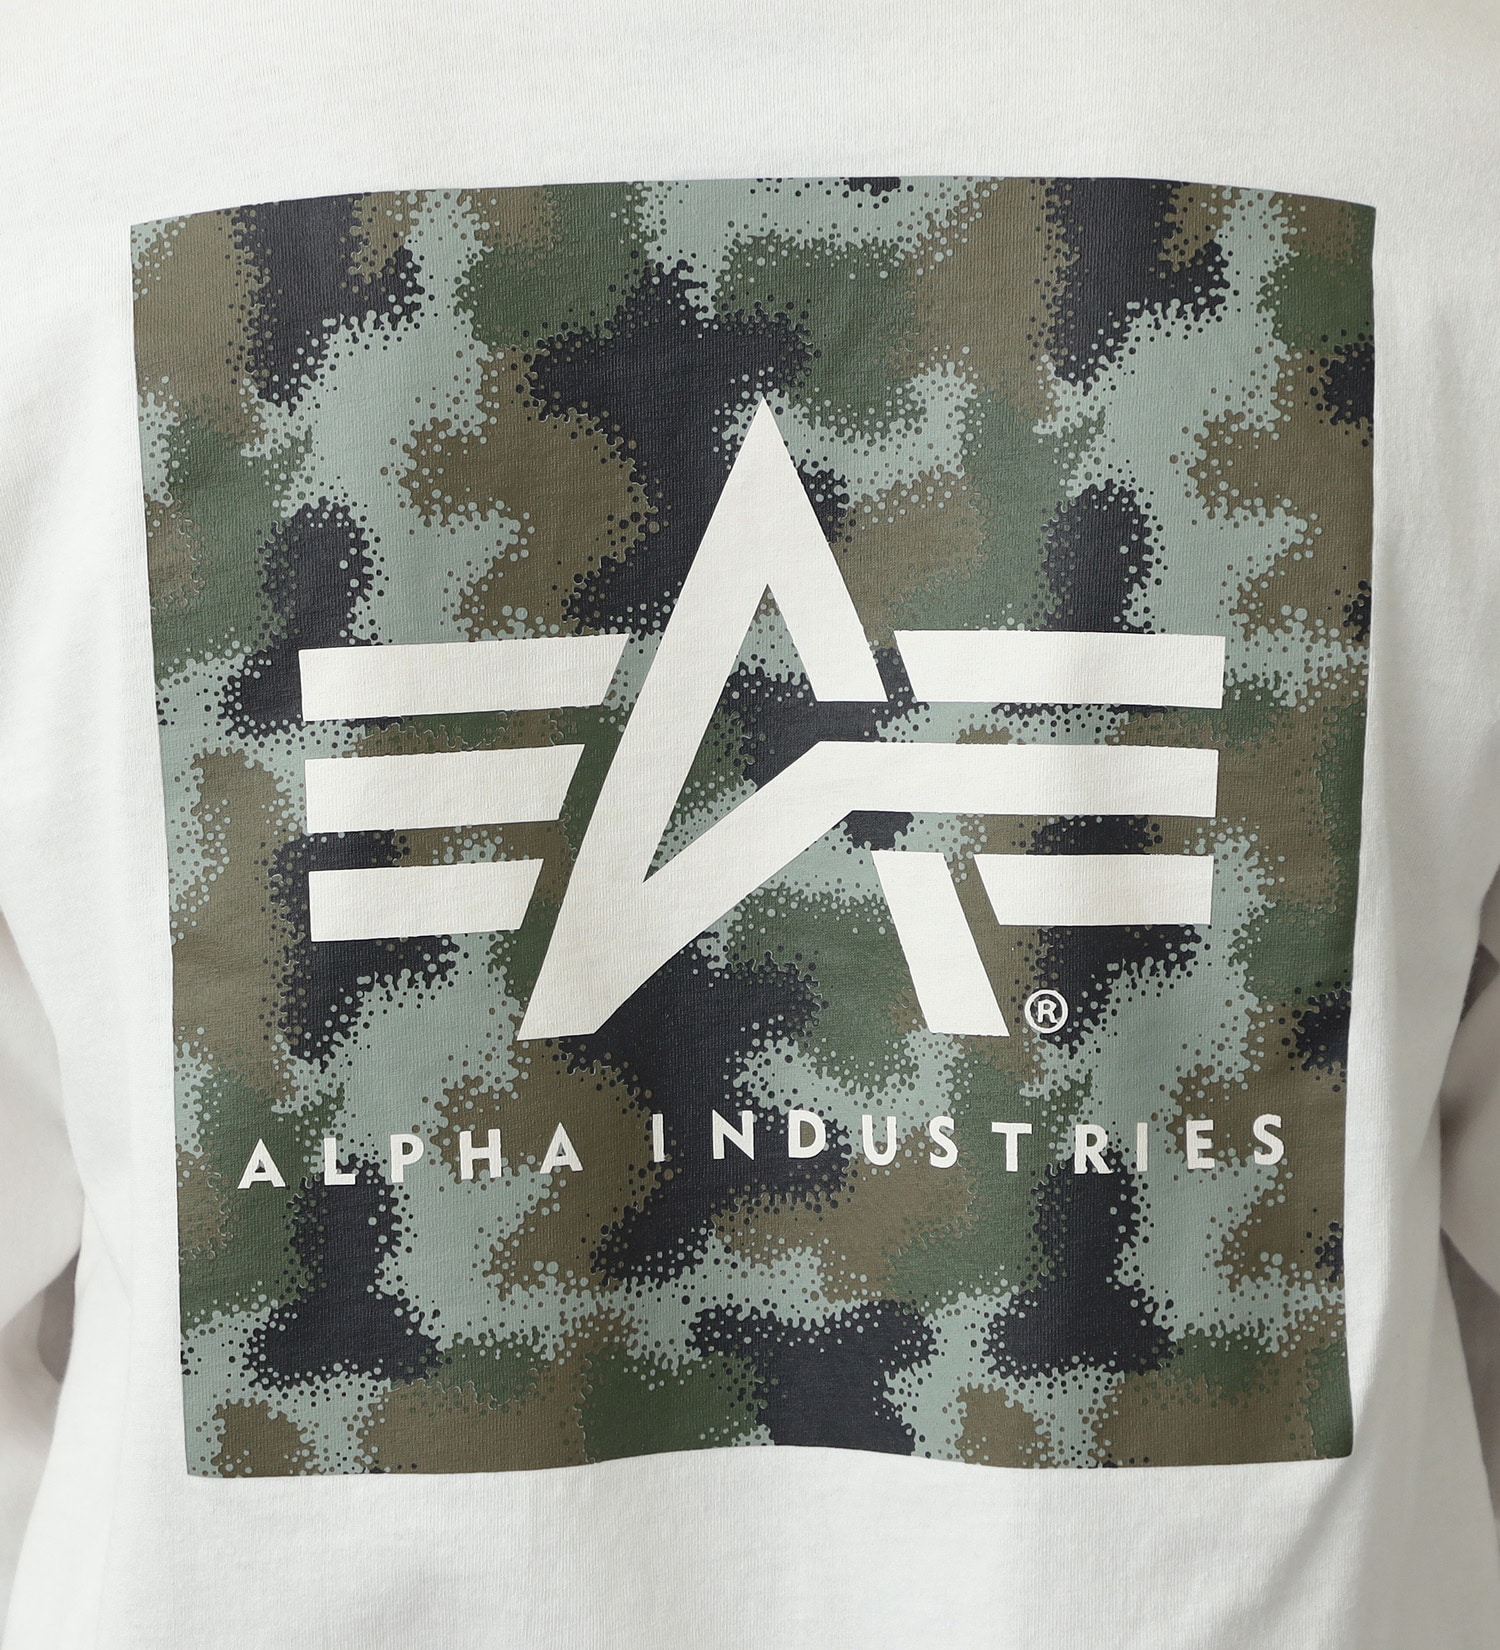 ALPHA(アルファ)の【GW SALE】【大きいサイズ】バックプリントボックスロゴ  長袖Tシャツ(カモ柄)|トップス/Tシャツ/カットソー/メンズ|ホワイト